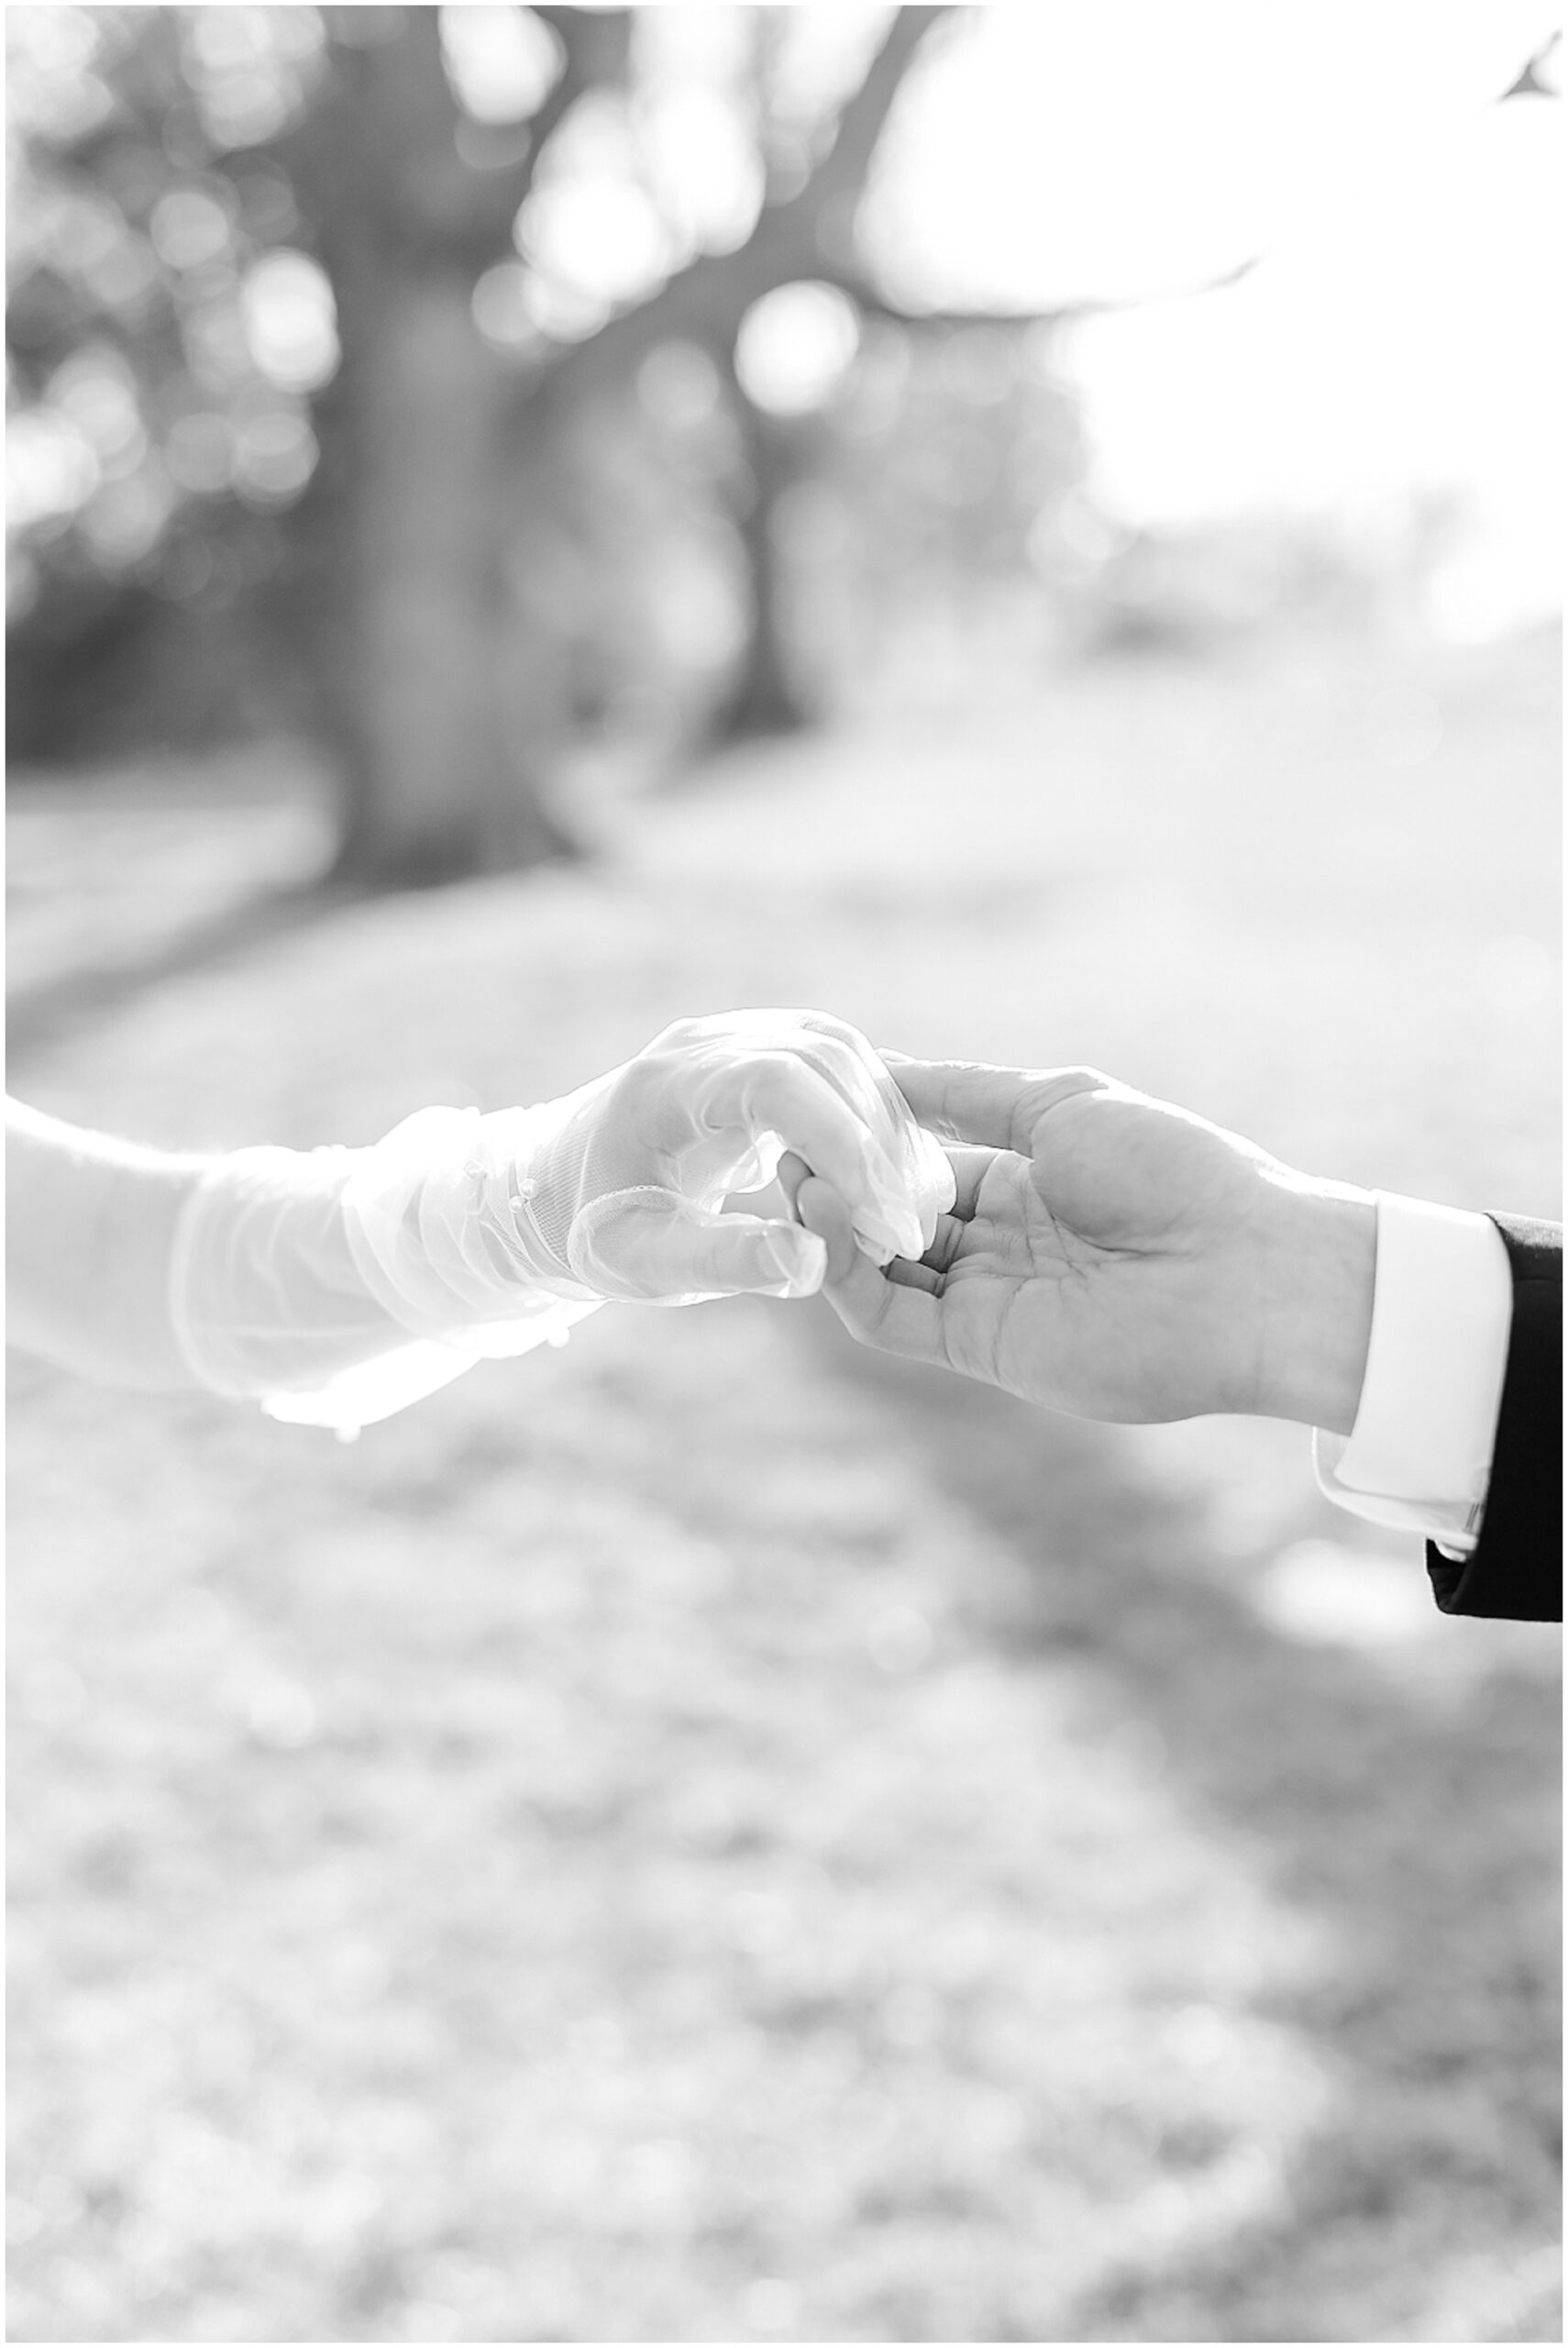 Holdings Hands | Artistic Wedding Photos